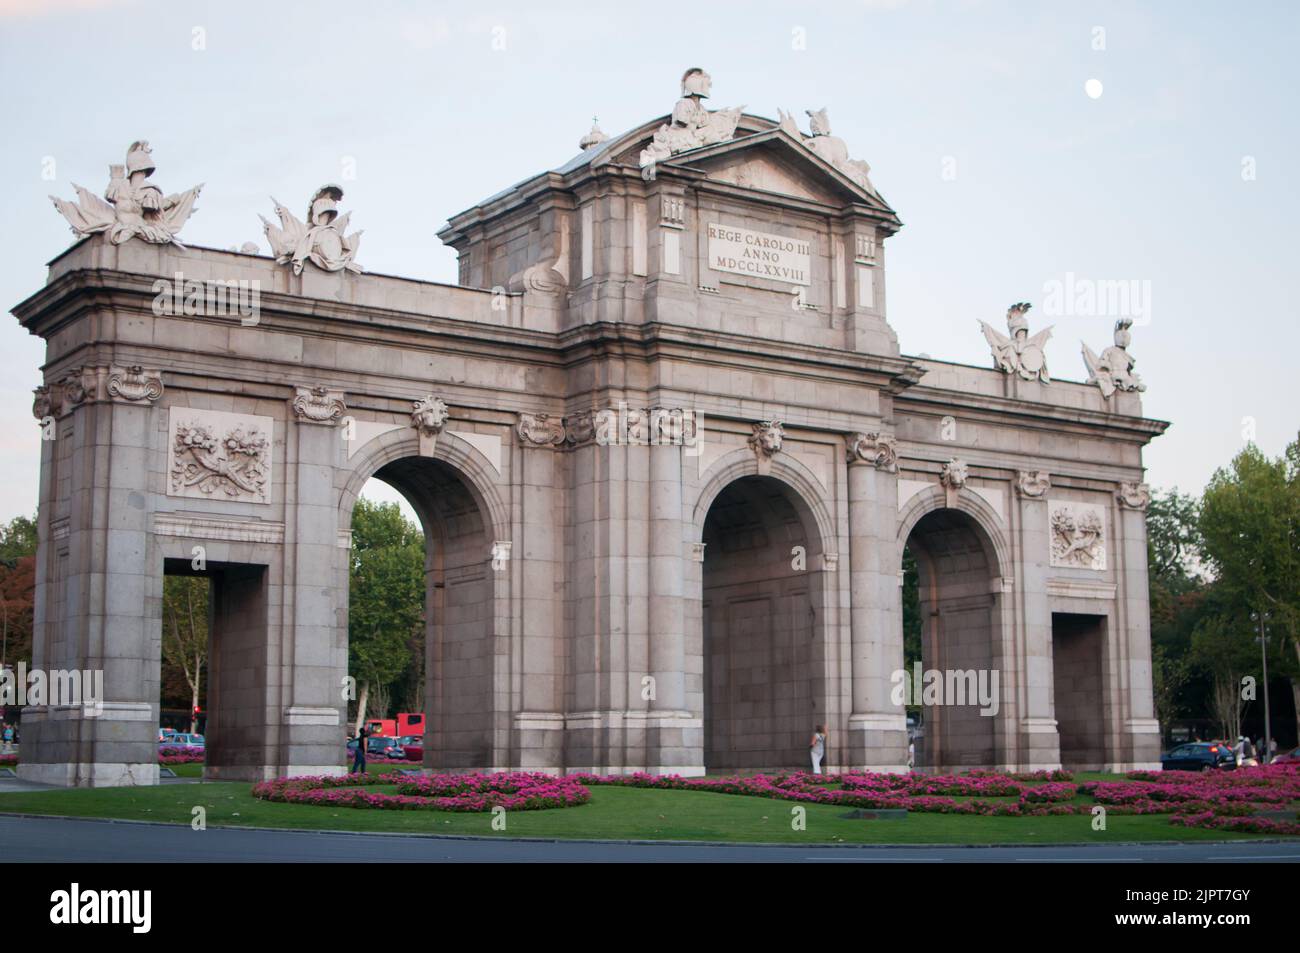 The view of Puerta de Alcala in the Plaza de la Independencia in Madrid, Spain. Stock Photo